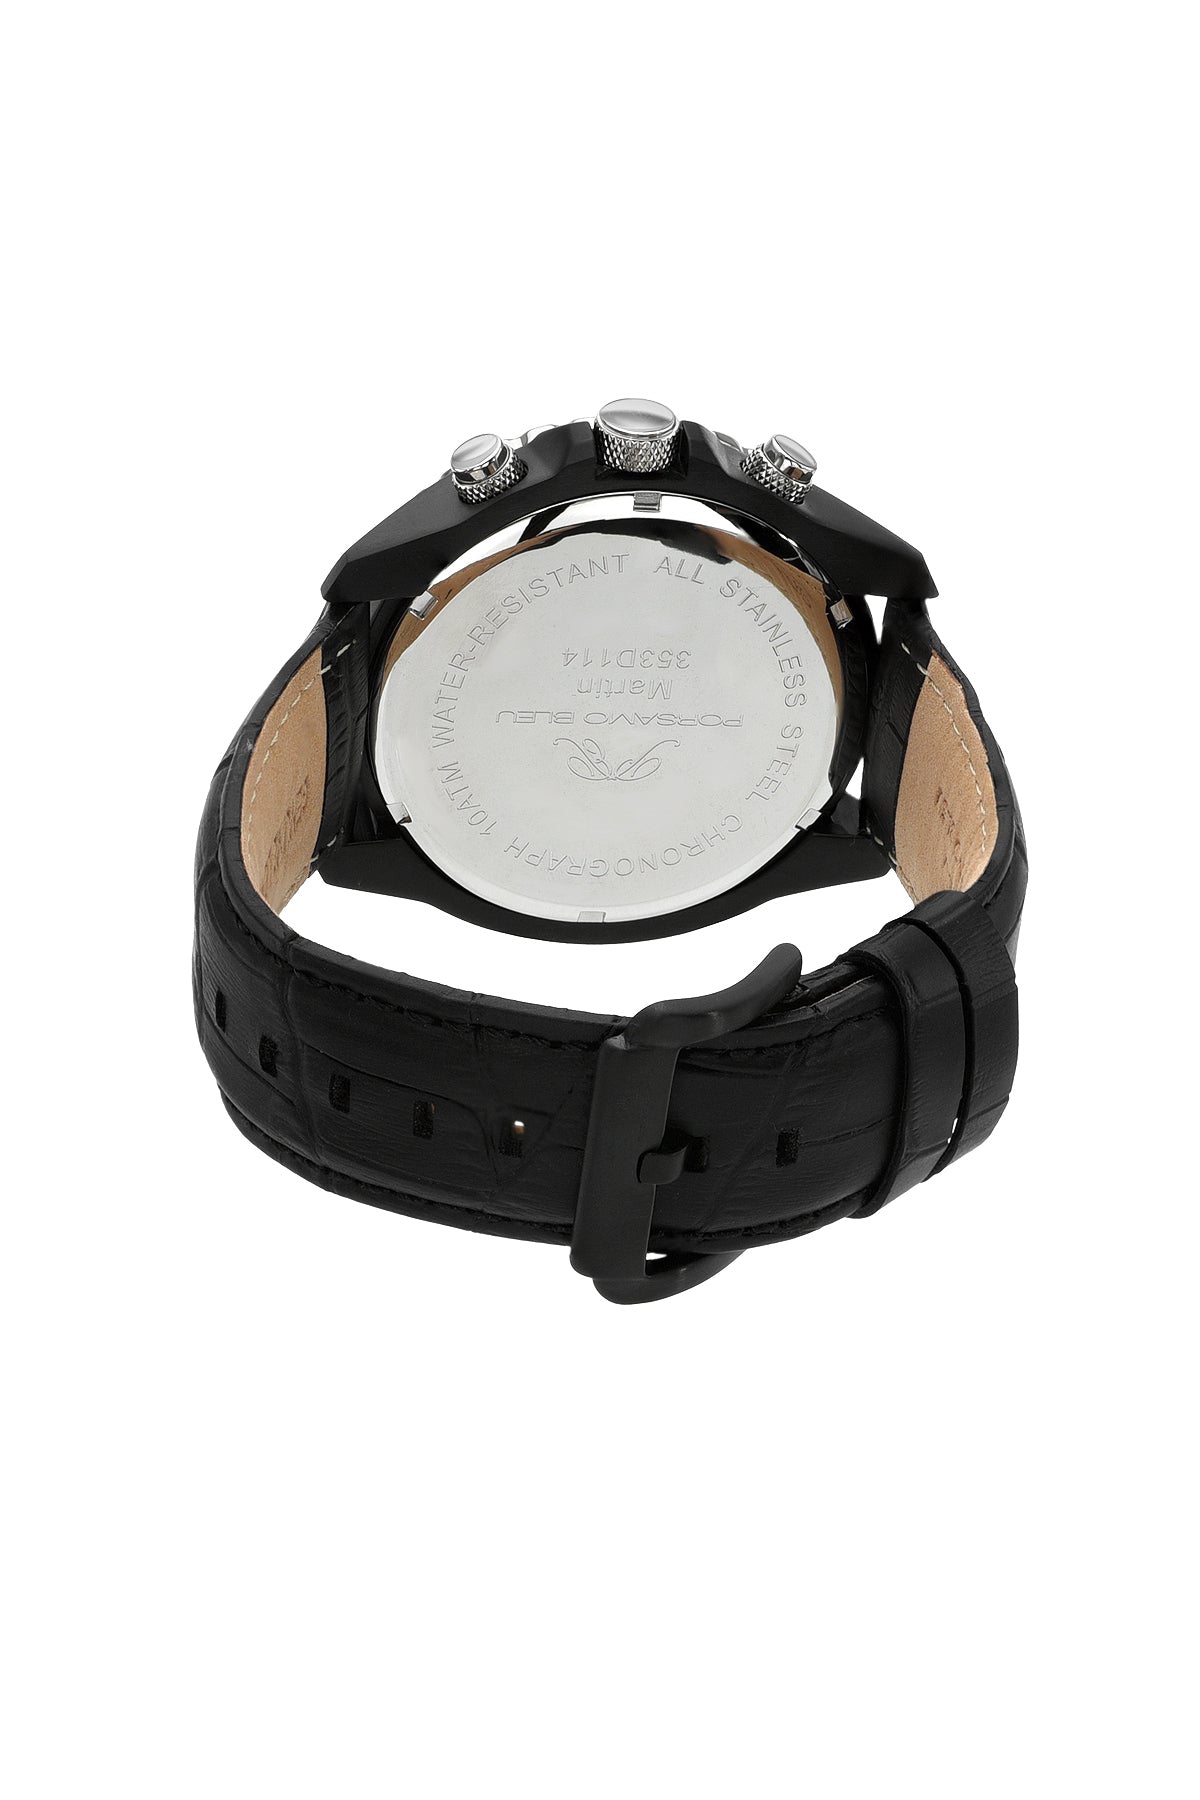 Porsamo Bleu Martin Luxury Chronograph Men's Watch Genuine Leather Band, Silver, Black, White 353DMAL